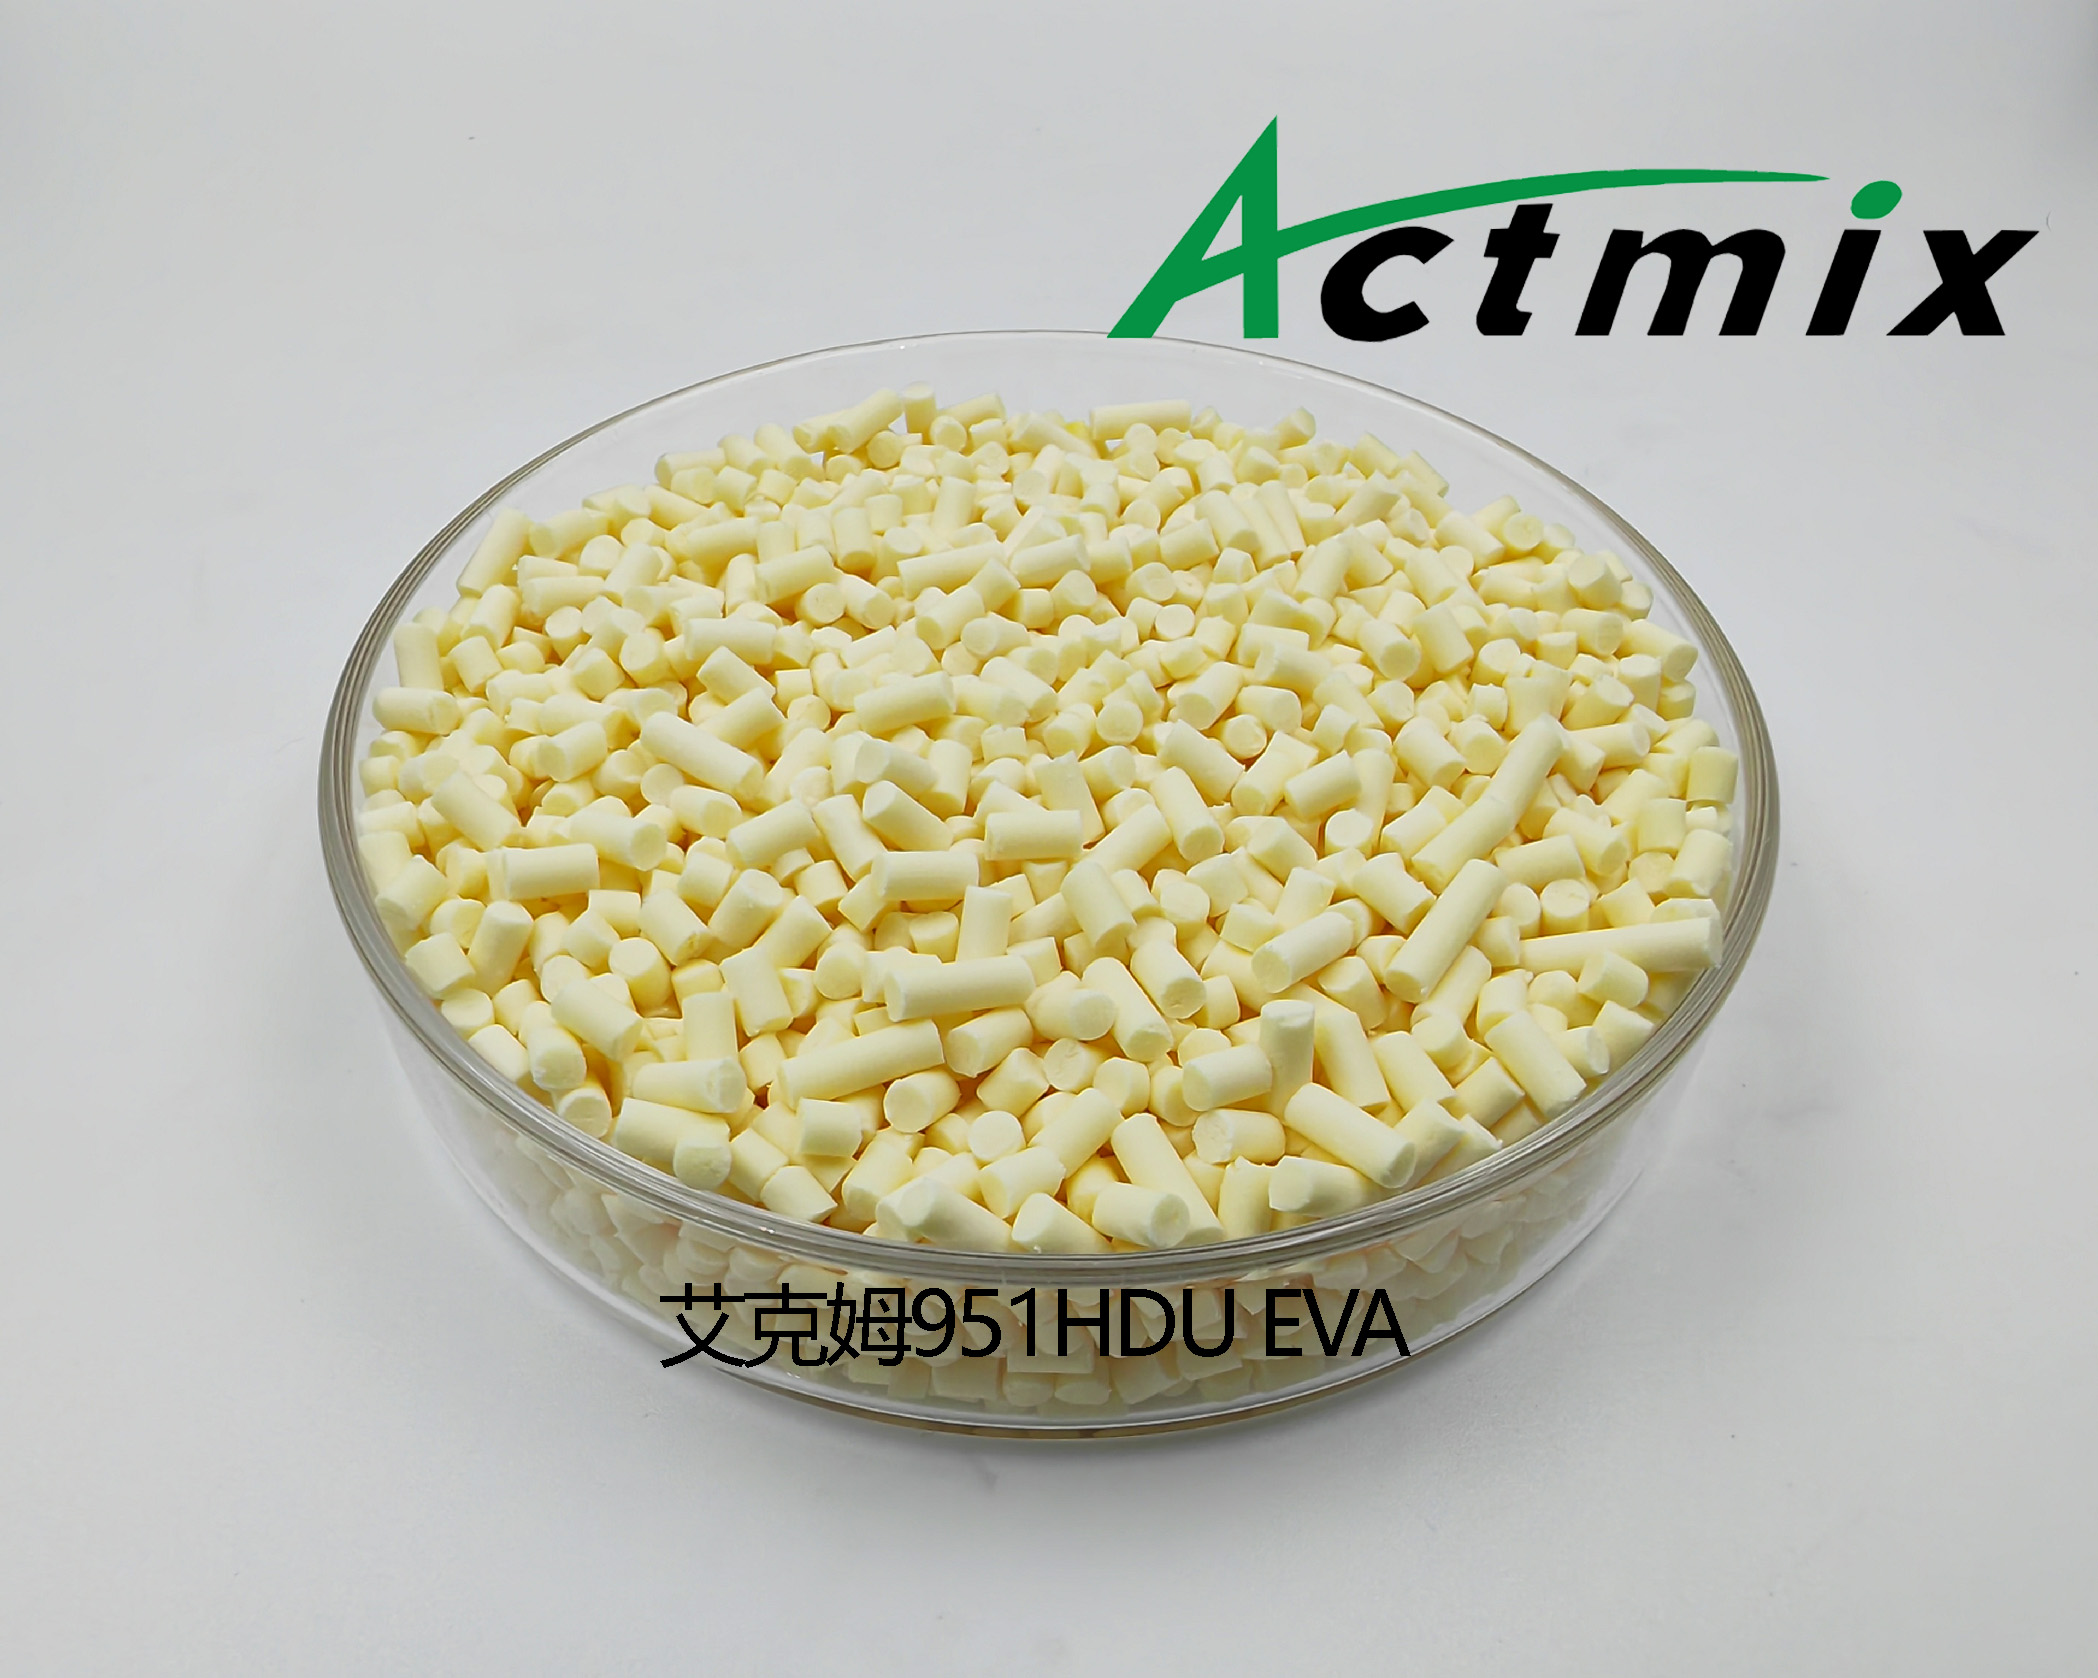 Actmix 951HDU/EVA